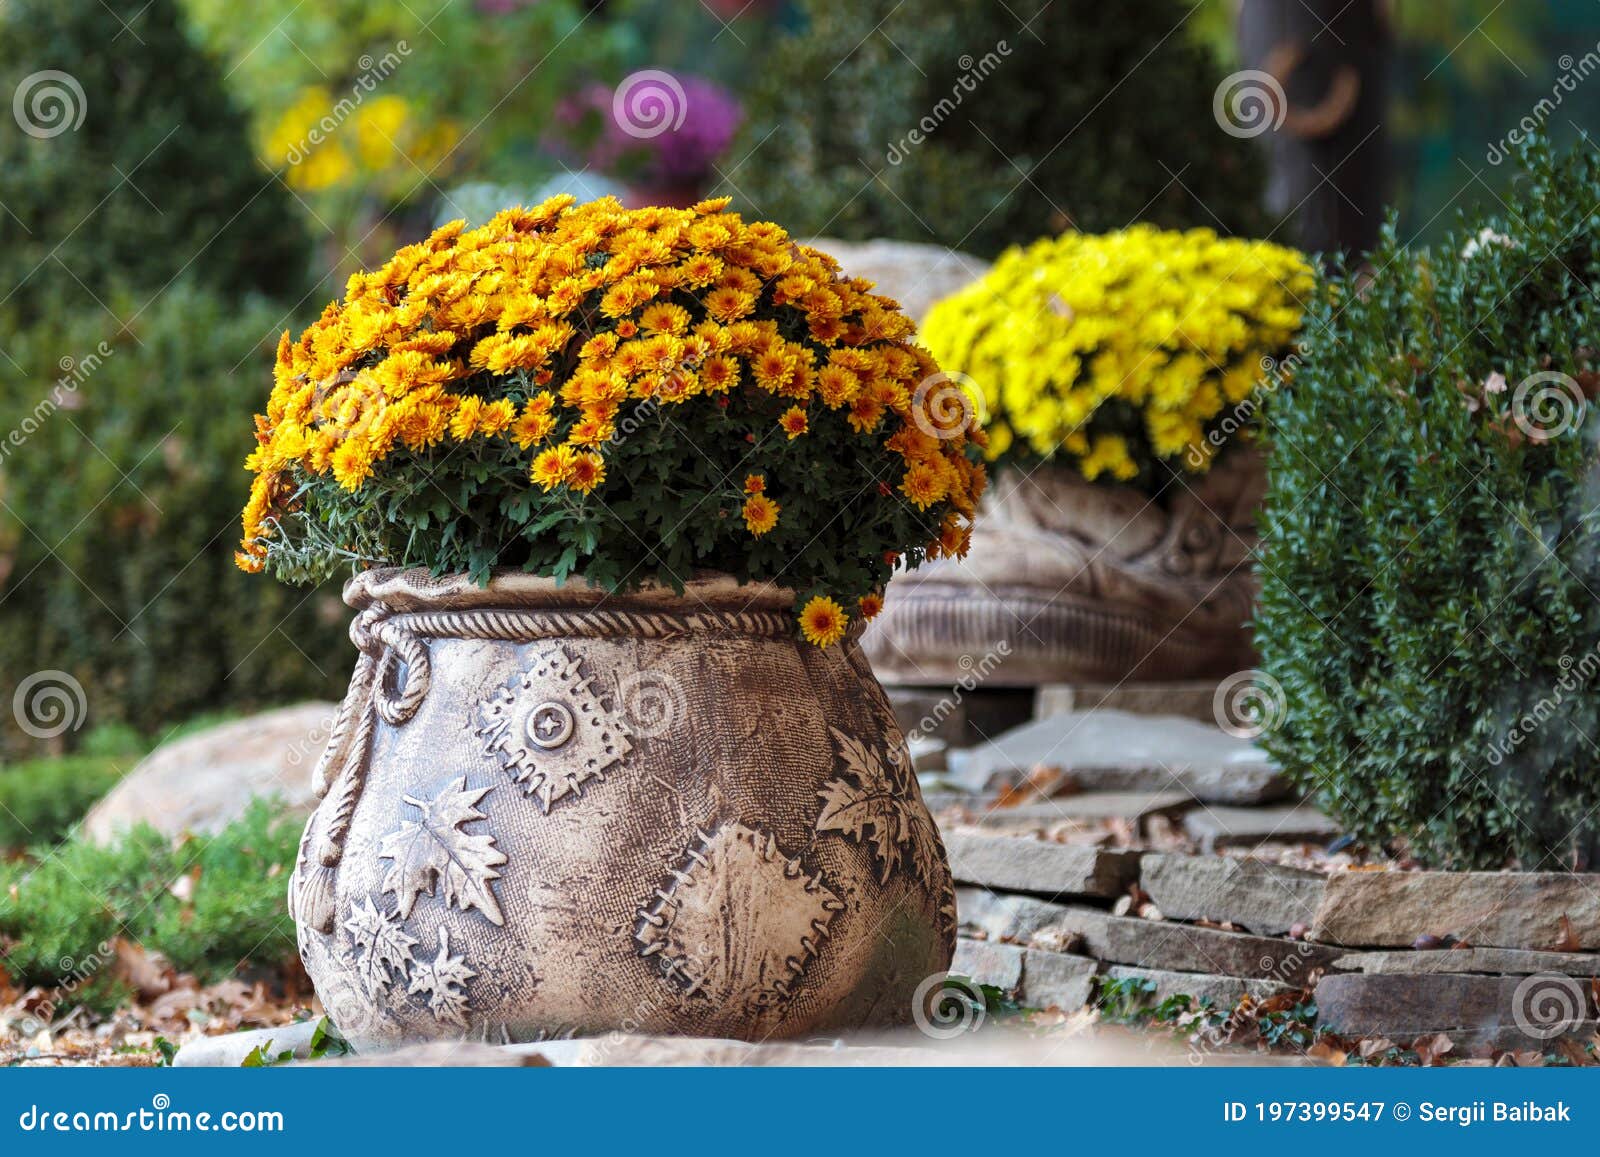 crysanthemnum flower pot. fall garden decor plant